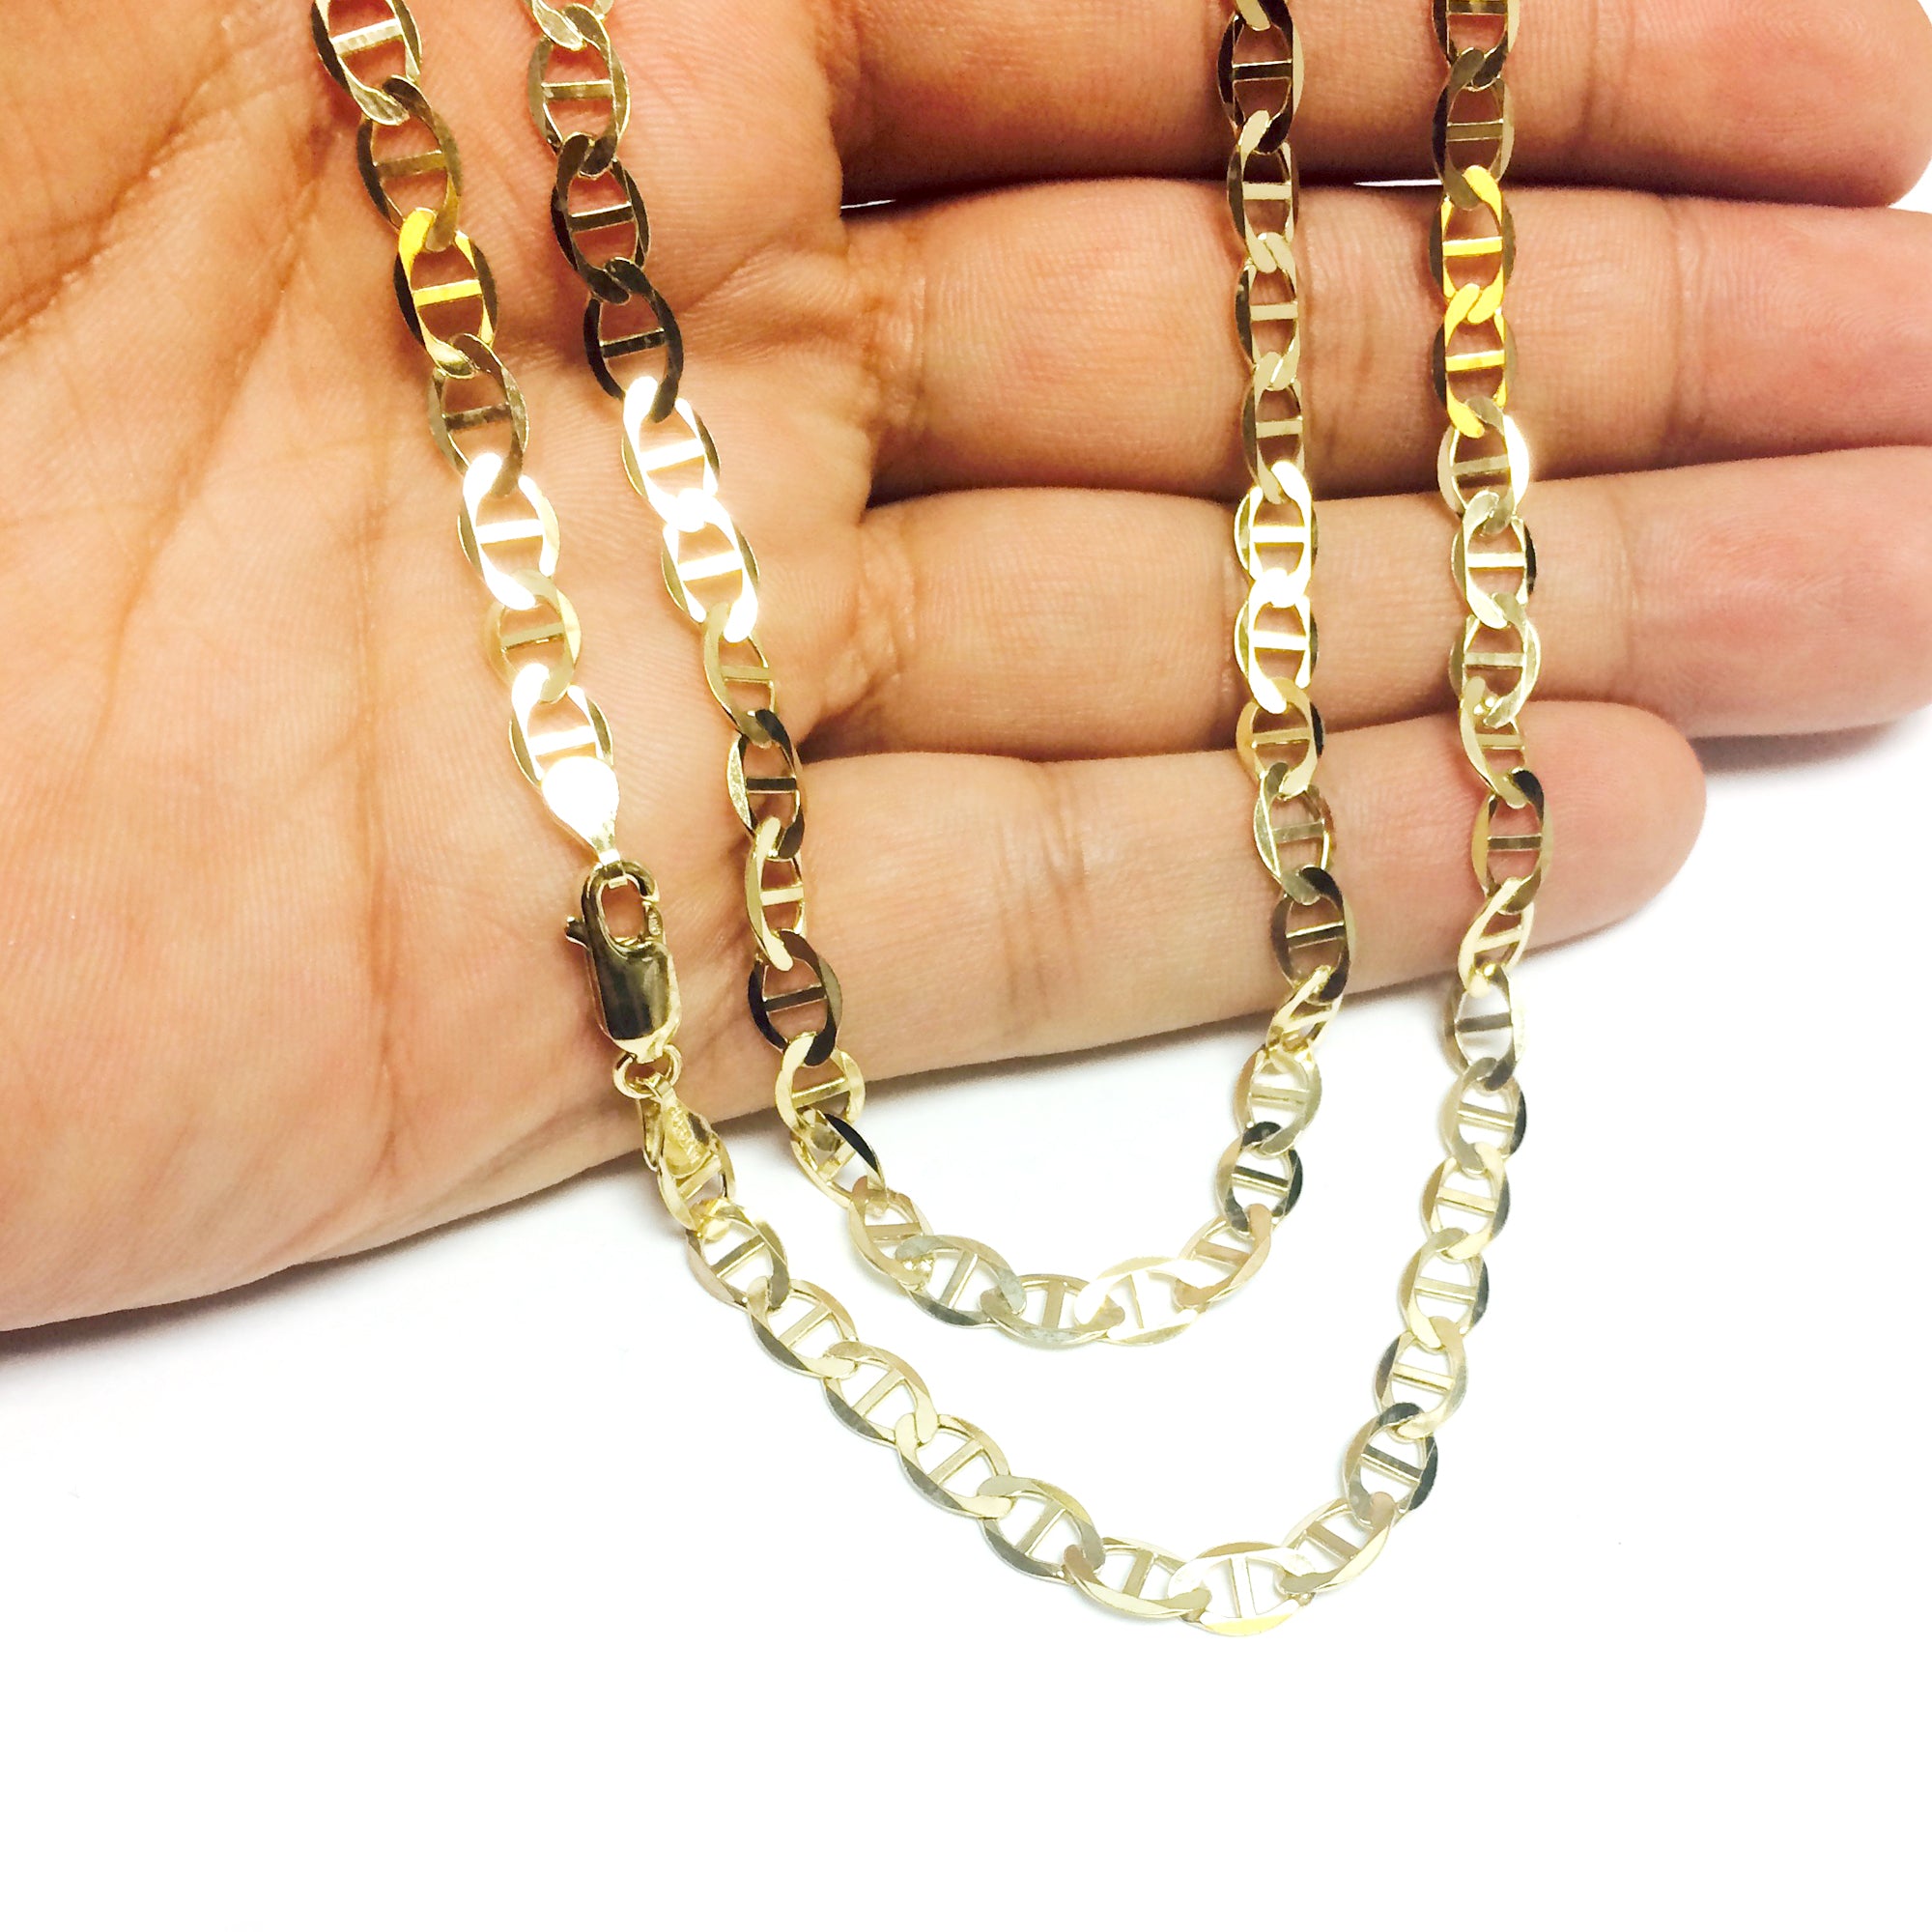 10k Yellow Gold Mariner Link Chain Bracelet, 5.1mm fine designer jewelry for men and women